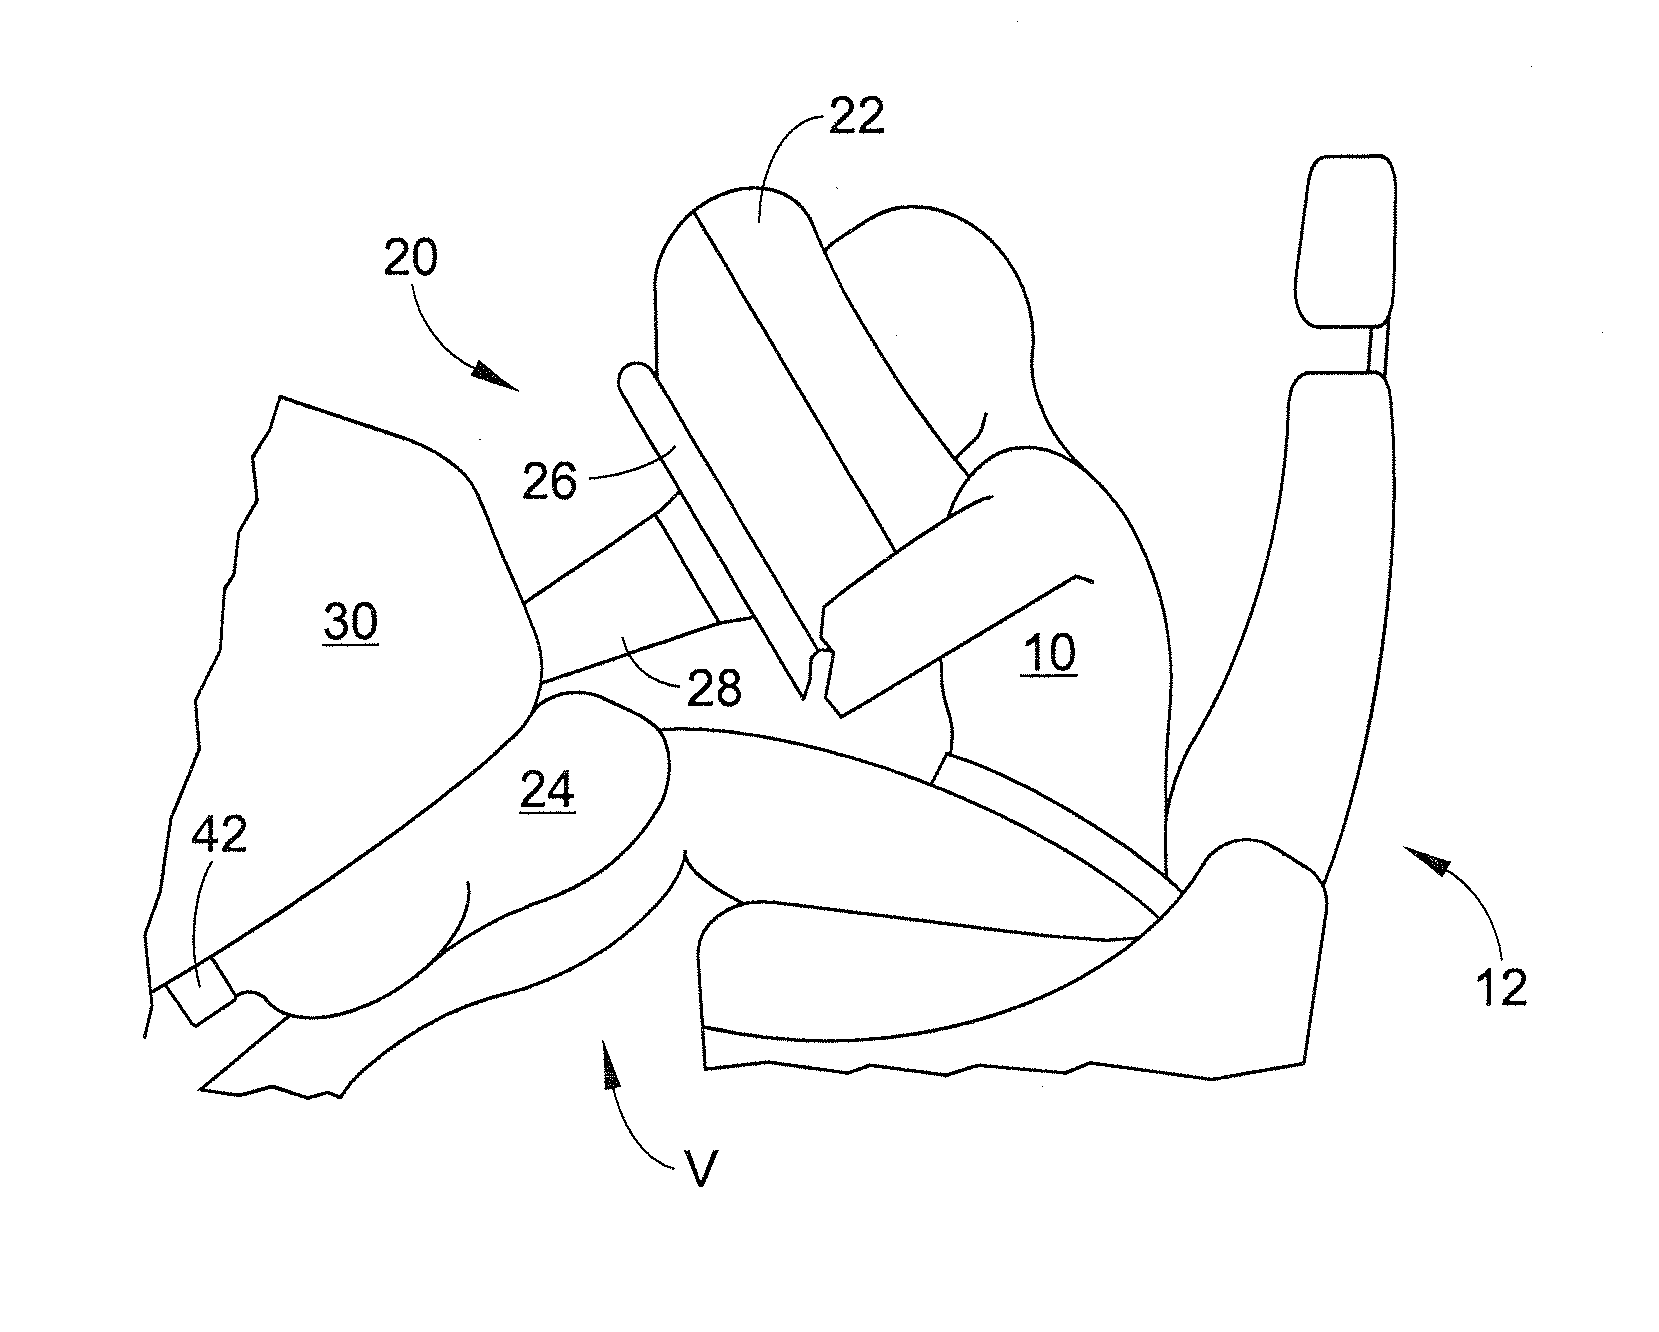 Multi-chamber knee airbag